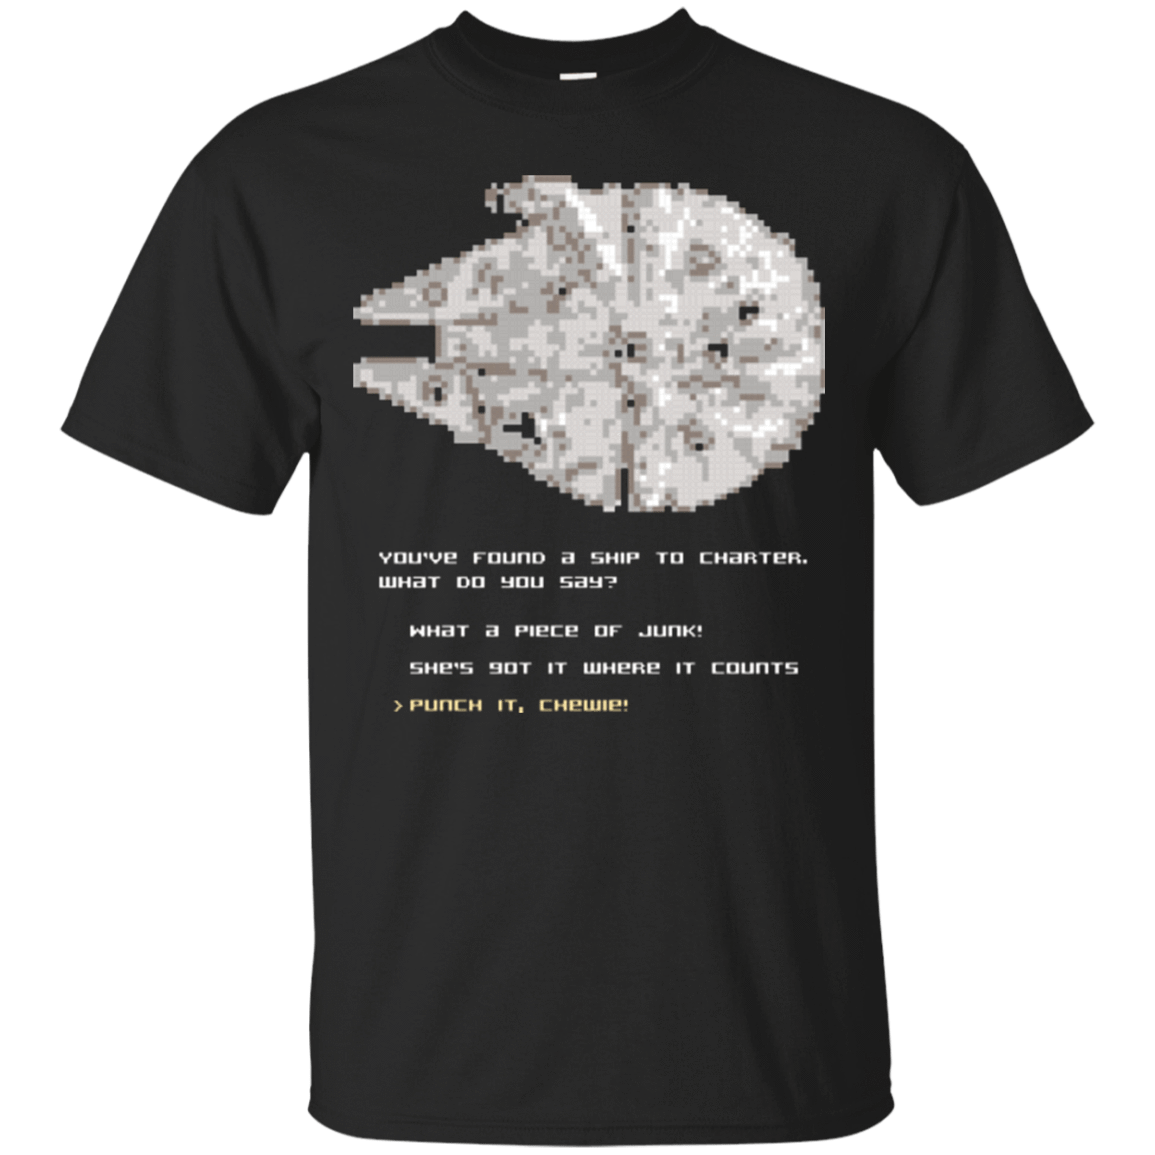 T-Shirts Black / Small 8-Bit Charter T-Shirt